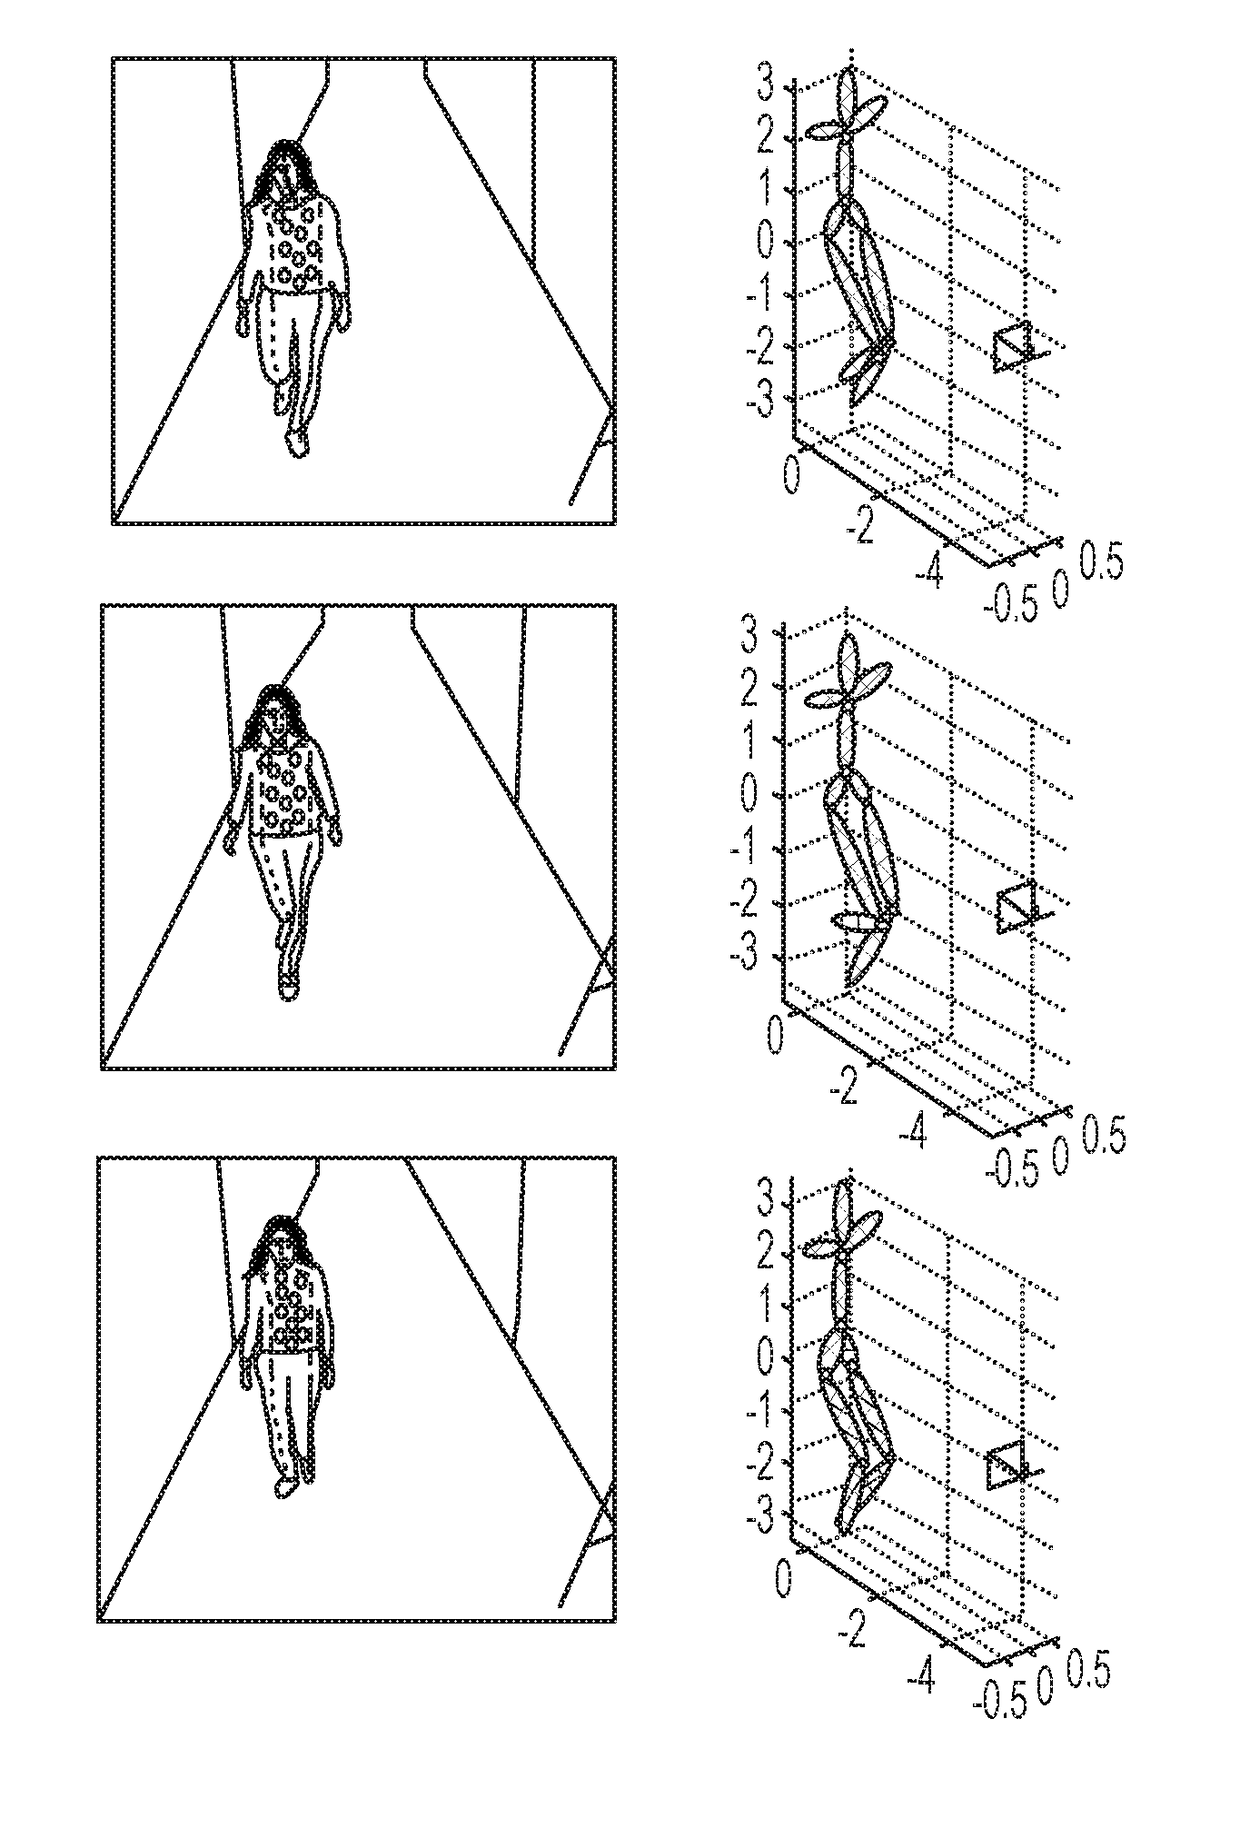 Automatic frontal-view gait segmentation for abnormal gait quantification